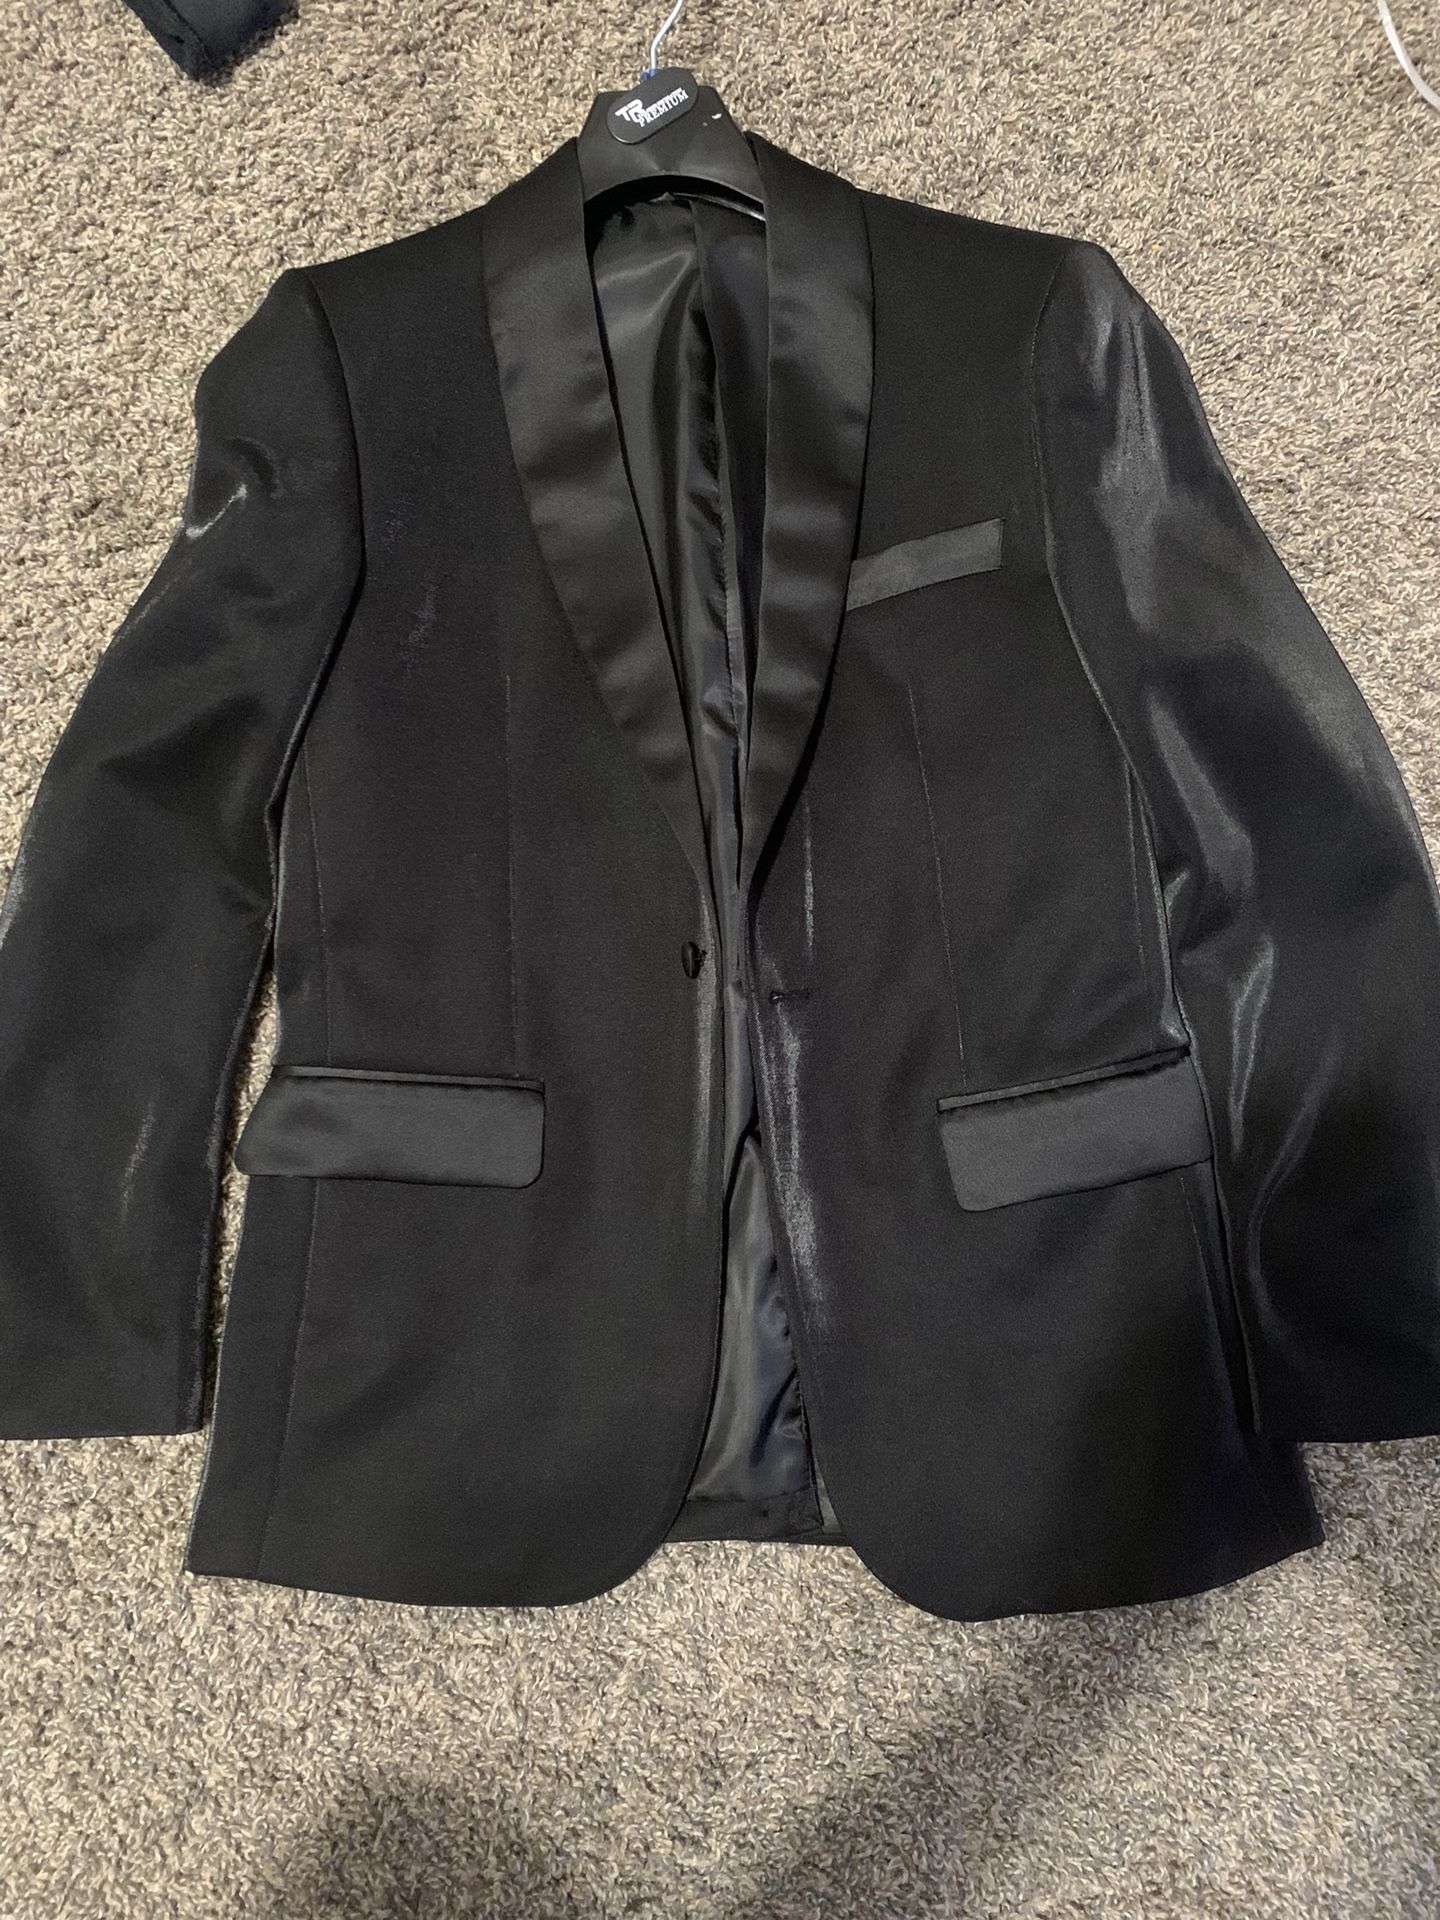 Men’s Prom/formal Suit Jacket New